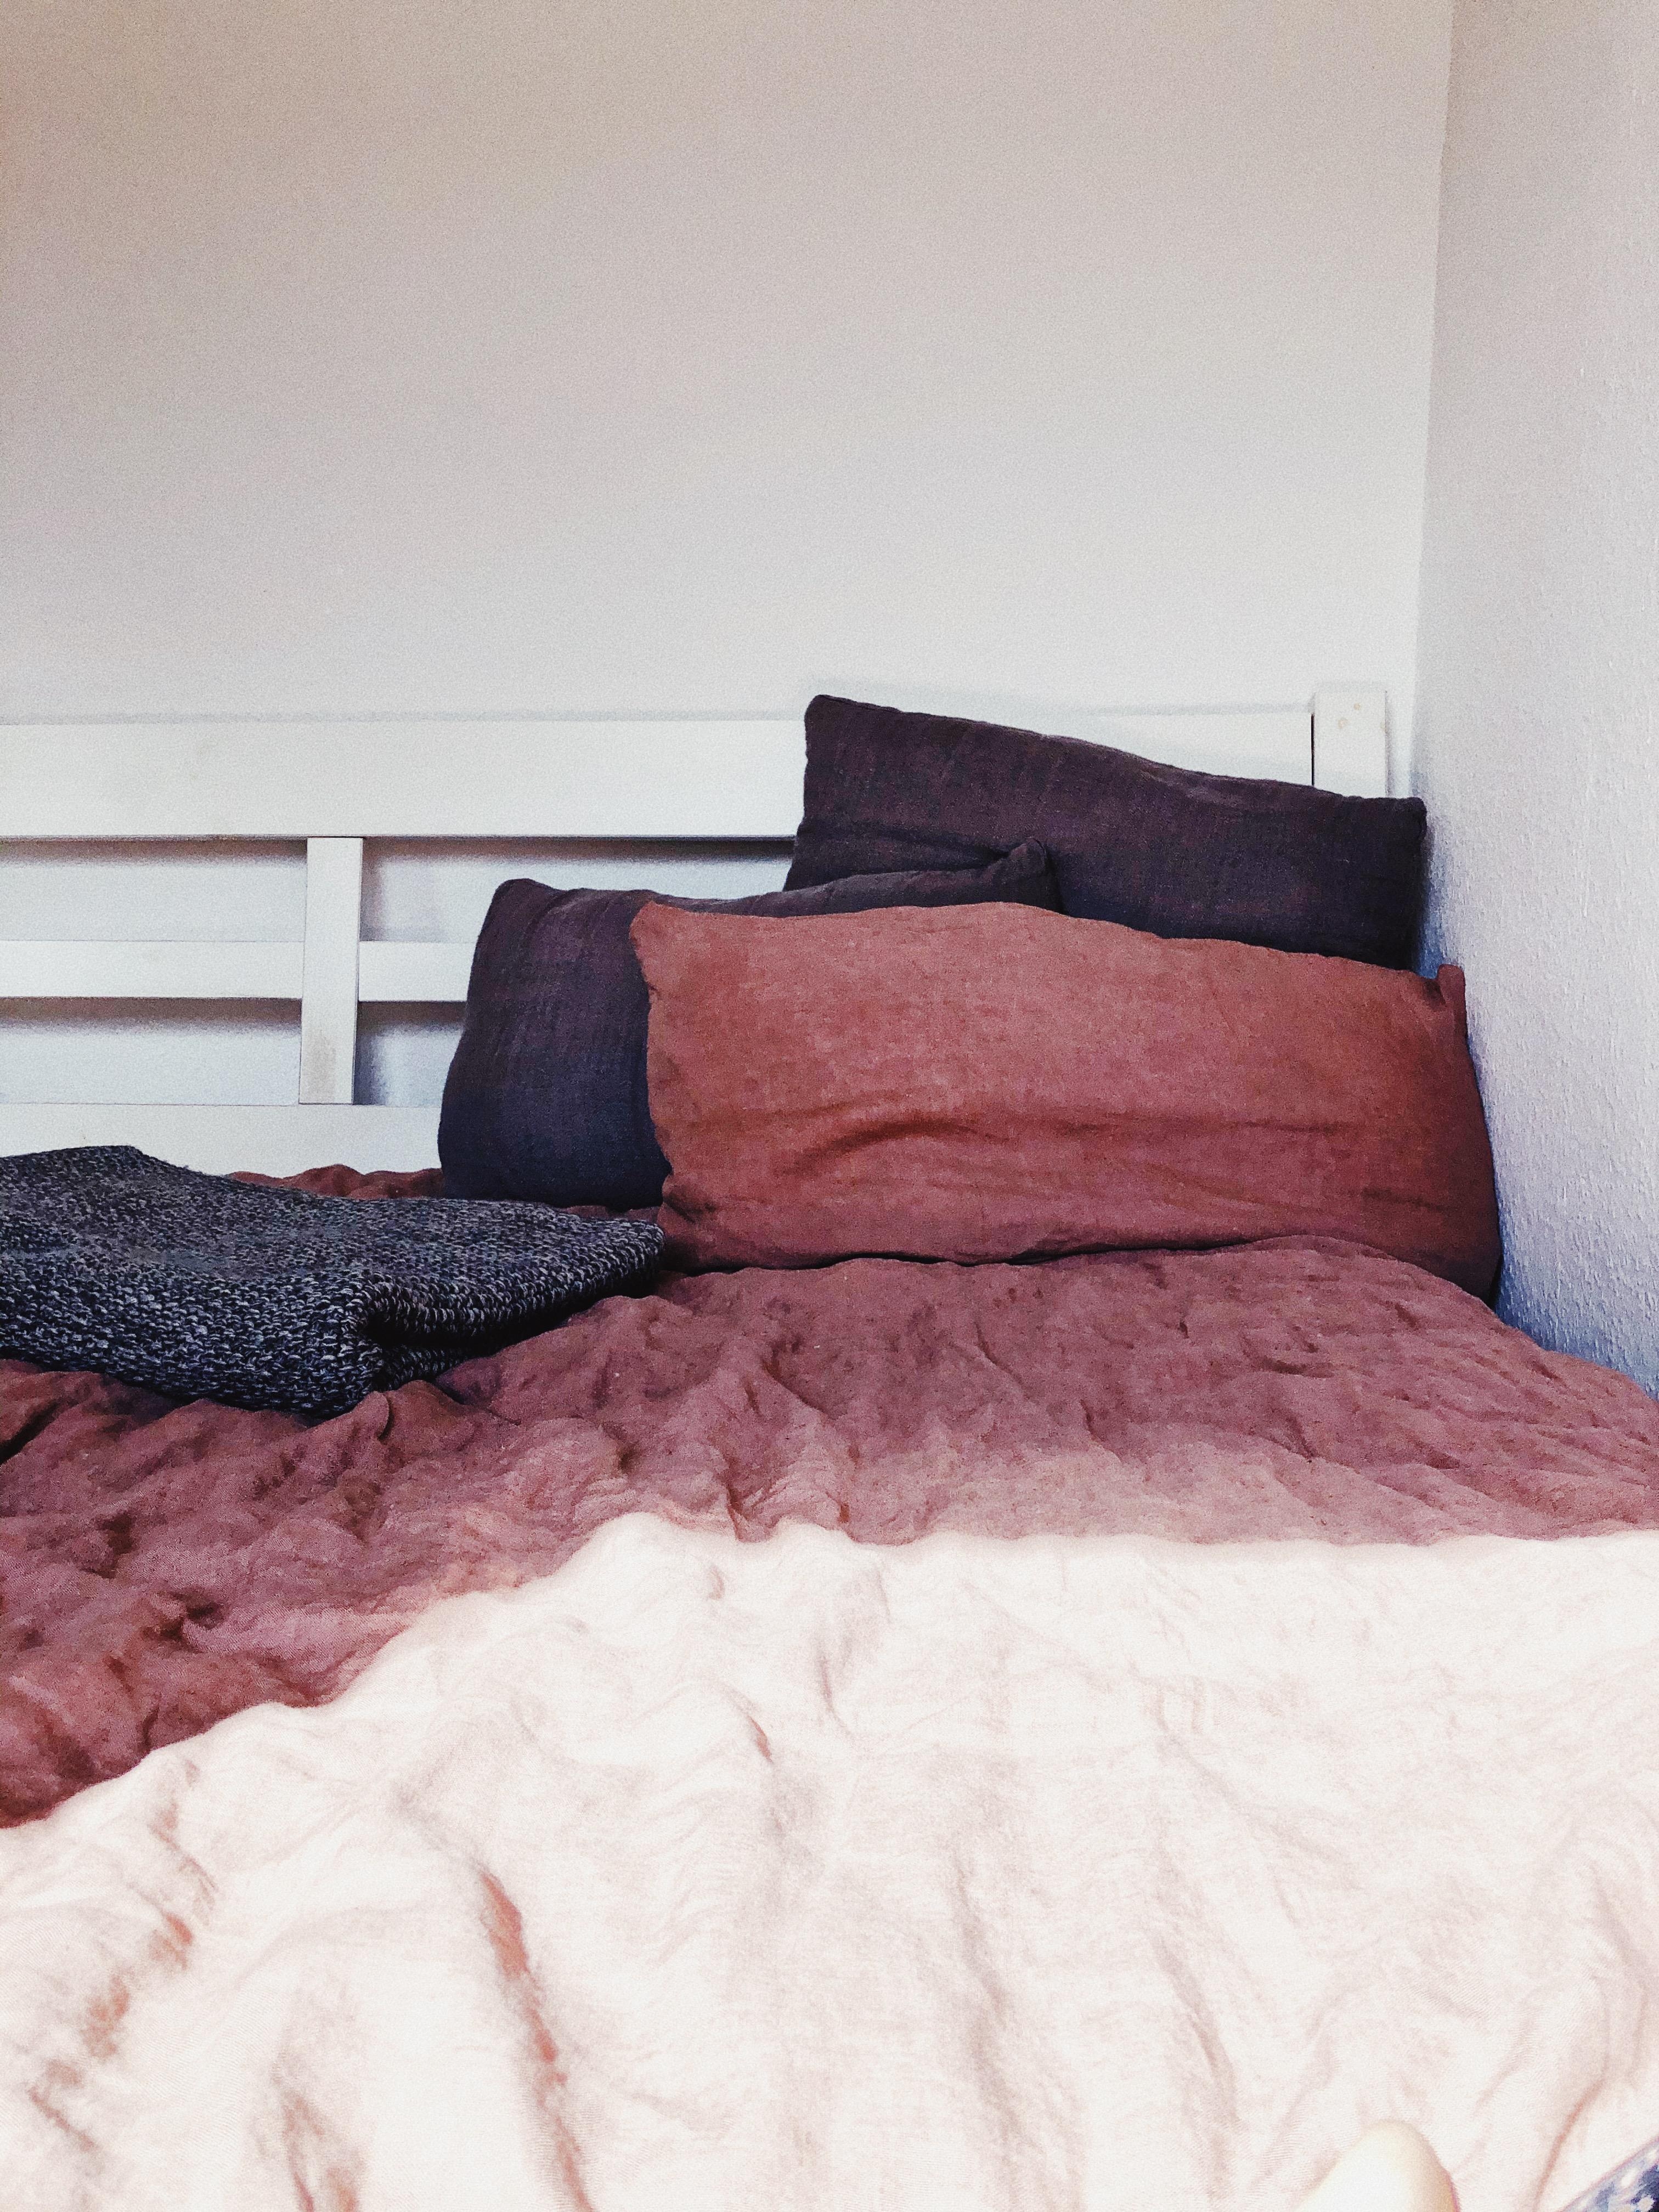 MORNINGGLORY
#mybedroom #bedroominspo #scandinavianinterior #skandi #leinenbettwäsche #light